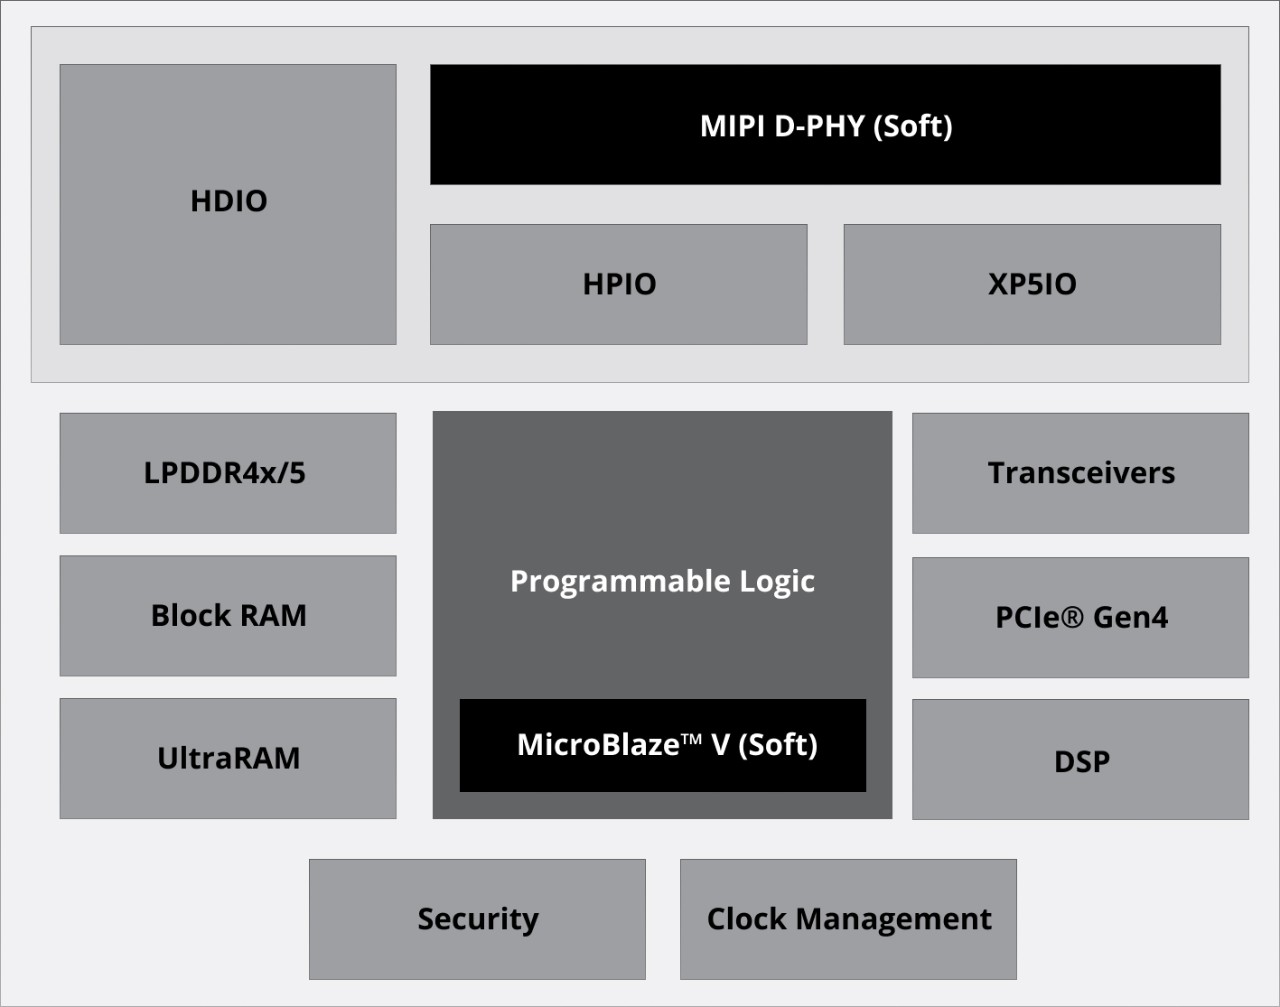 AMD Spartan UltraScale+ FPGA 提供一系列不同类型 I/O 的全面 I/O 功能、高达 3.3V 的高密度 I/O (HDIO) 以及高达 1.8V 的高性能 I/O (HPIO)，不仅支持 2500Mb/s 的 MIPI、1600Mb/s 的 LVDS、高达 1.5V 的 XP5IO，而且还支持 3200Mb/s 的 MIPI 和 1800Mb/s 的 LVDS。此外，FPGA 还提供片上存储器作为块 RAM 的组合，以实现低时延和高吞吐量，并提供 UltraRAM，其除了通过高达 4266Mb/s 的硬化内存控制器和高达 2400Mb/s 的 DDR4 软内存控制器 IP 提供外部内存 LPDDR4x 和 LPDDR5 之外，还提供海量片上存储器。对于需要高性能收发器的应用，Spartan UltraScale+ FPGA 为架构支持可达 16.3Gb/s 的 GTH 收发器和单个振荡器，串行解串器除了符合 PCIe Gen4 x8 标准外，还可消除额外的时钟组件。安全特性，如通过 eFUSE 字节条带实现的 AES-GCM 解密，可确保支持快速配置，而且每个器件是唯一的，通过物理不可克隆功能真随机数生成器可识别，其对于稳健、可靠的加密至关重要。